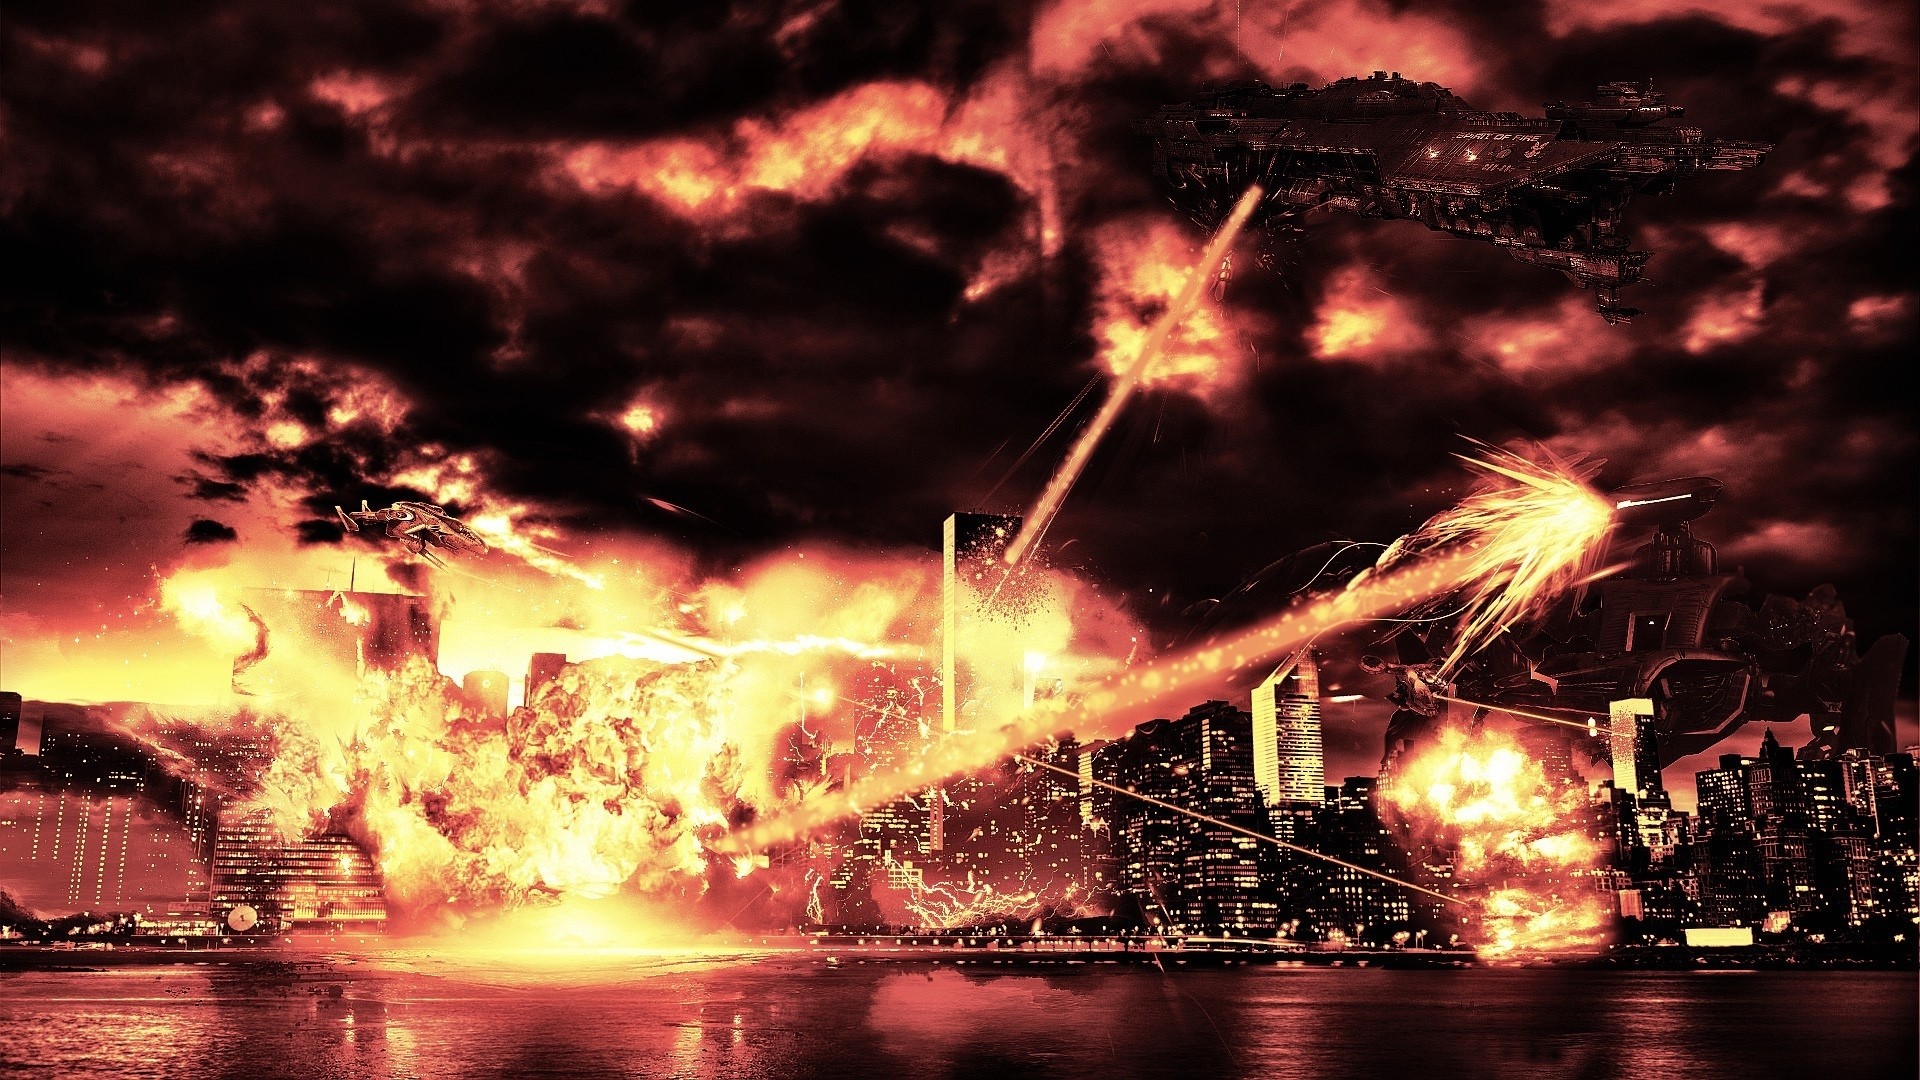 1920x1080 Sci-fi cg digital art invasion apocalyptic alien spaceship spacecraft fire  weapons cities dark destruction wallpaper |  | 40086 | WallpaperUP